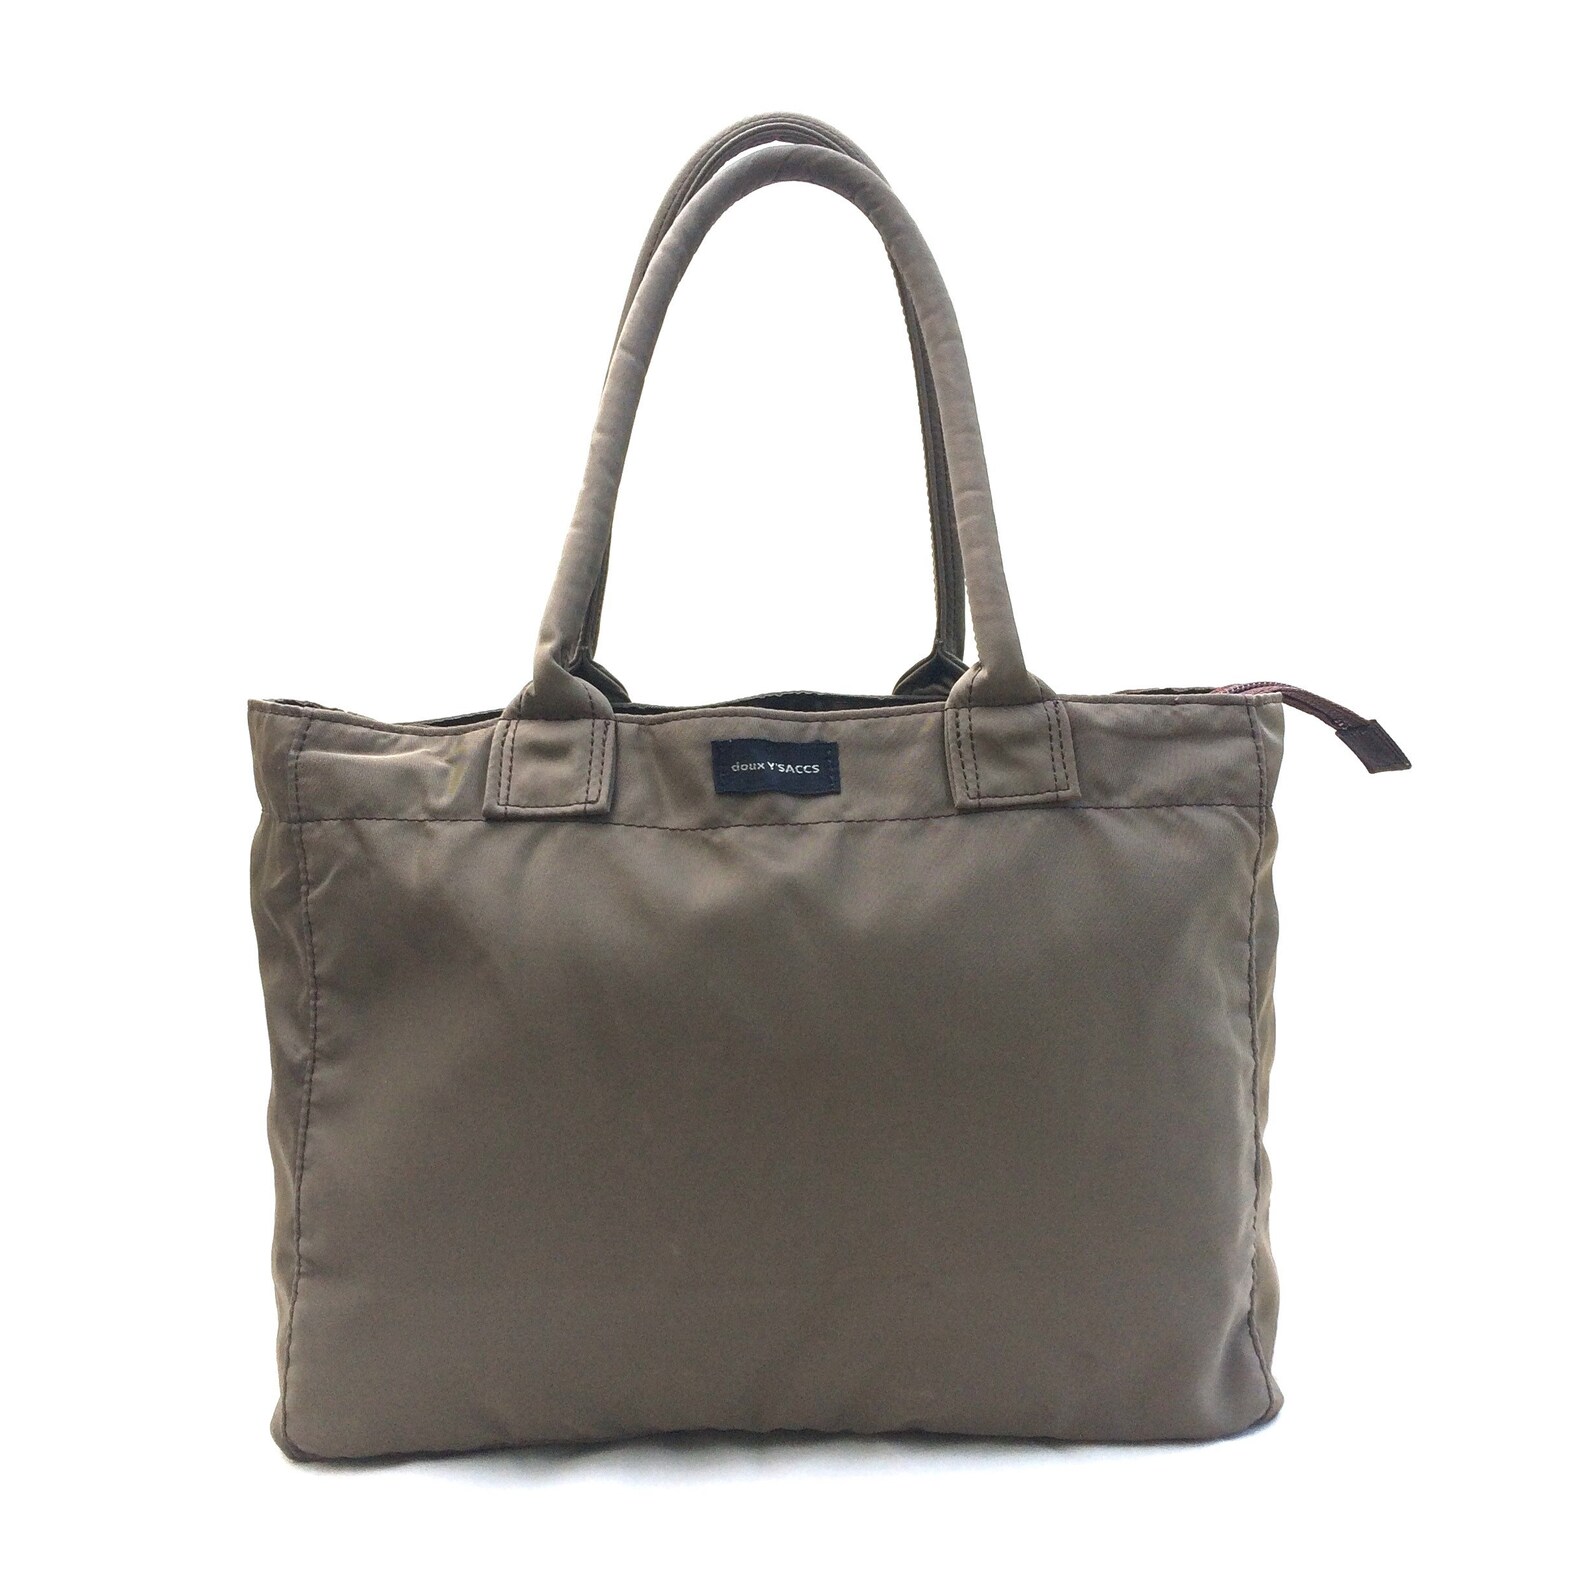 Doux Ysaccs Handbag Nice Design Good Condition | Etsy